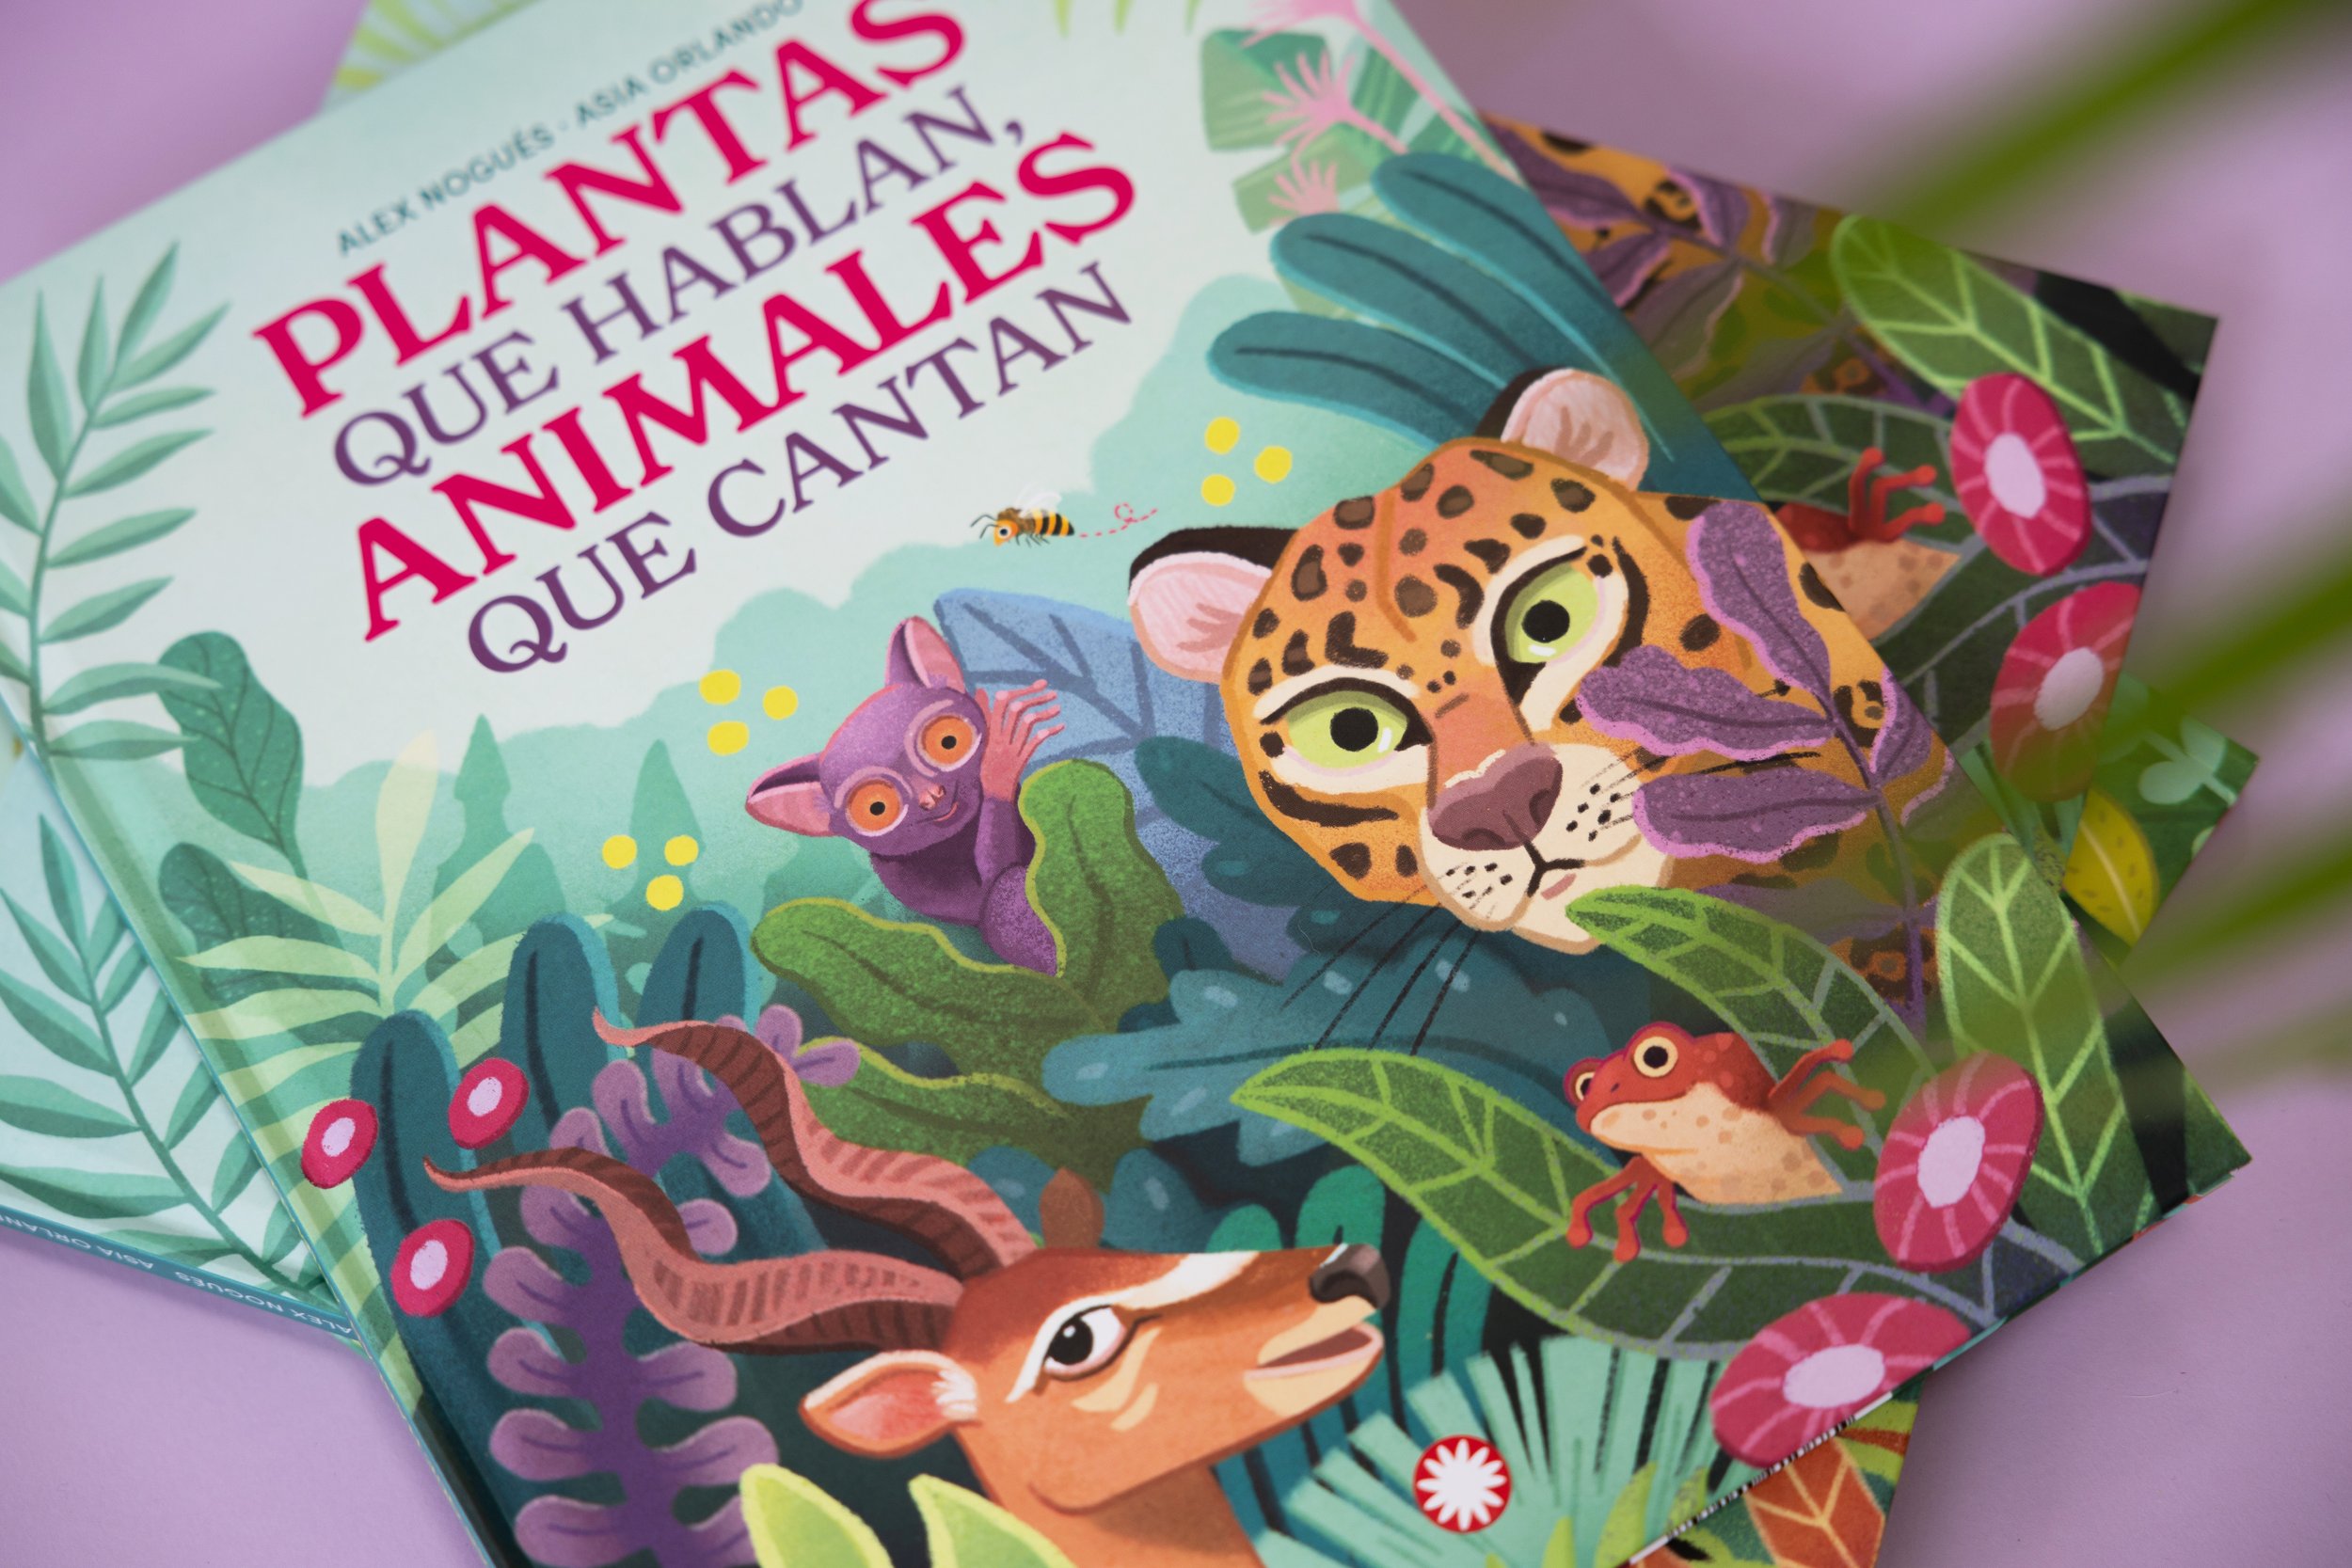 Asia Orlando plantas que hablan editorial flamboyant libro ilustrado animales naturaleza illustrated book animals nature illustrator.jpg